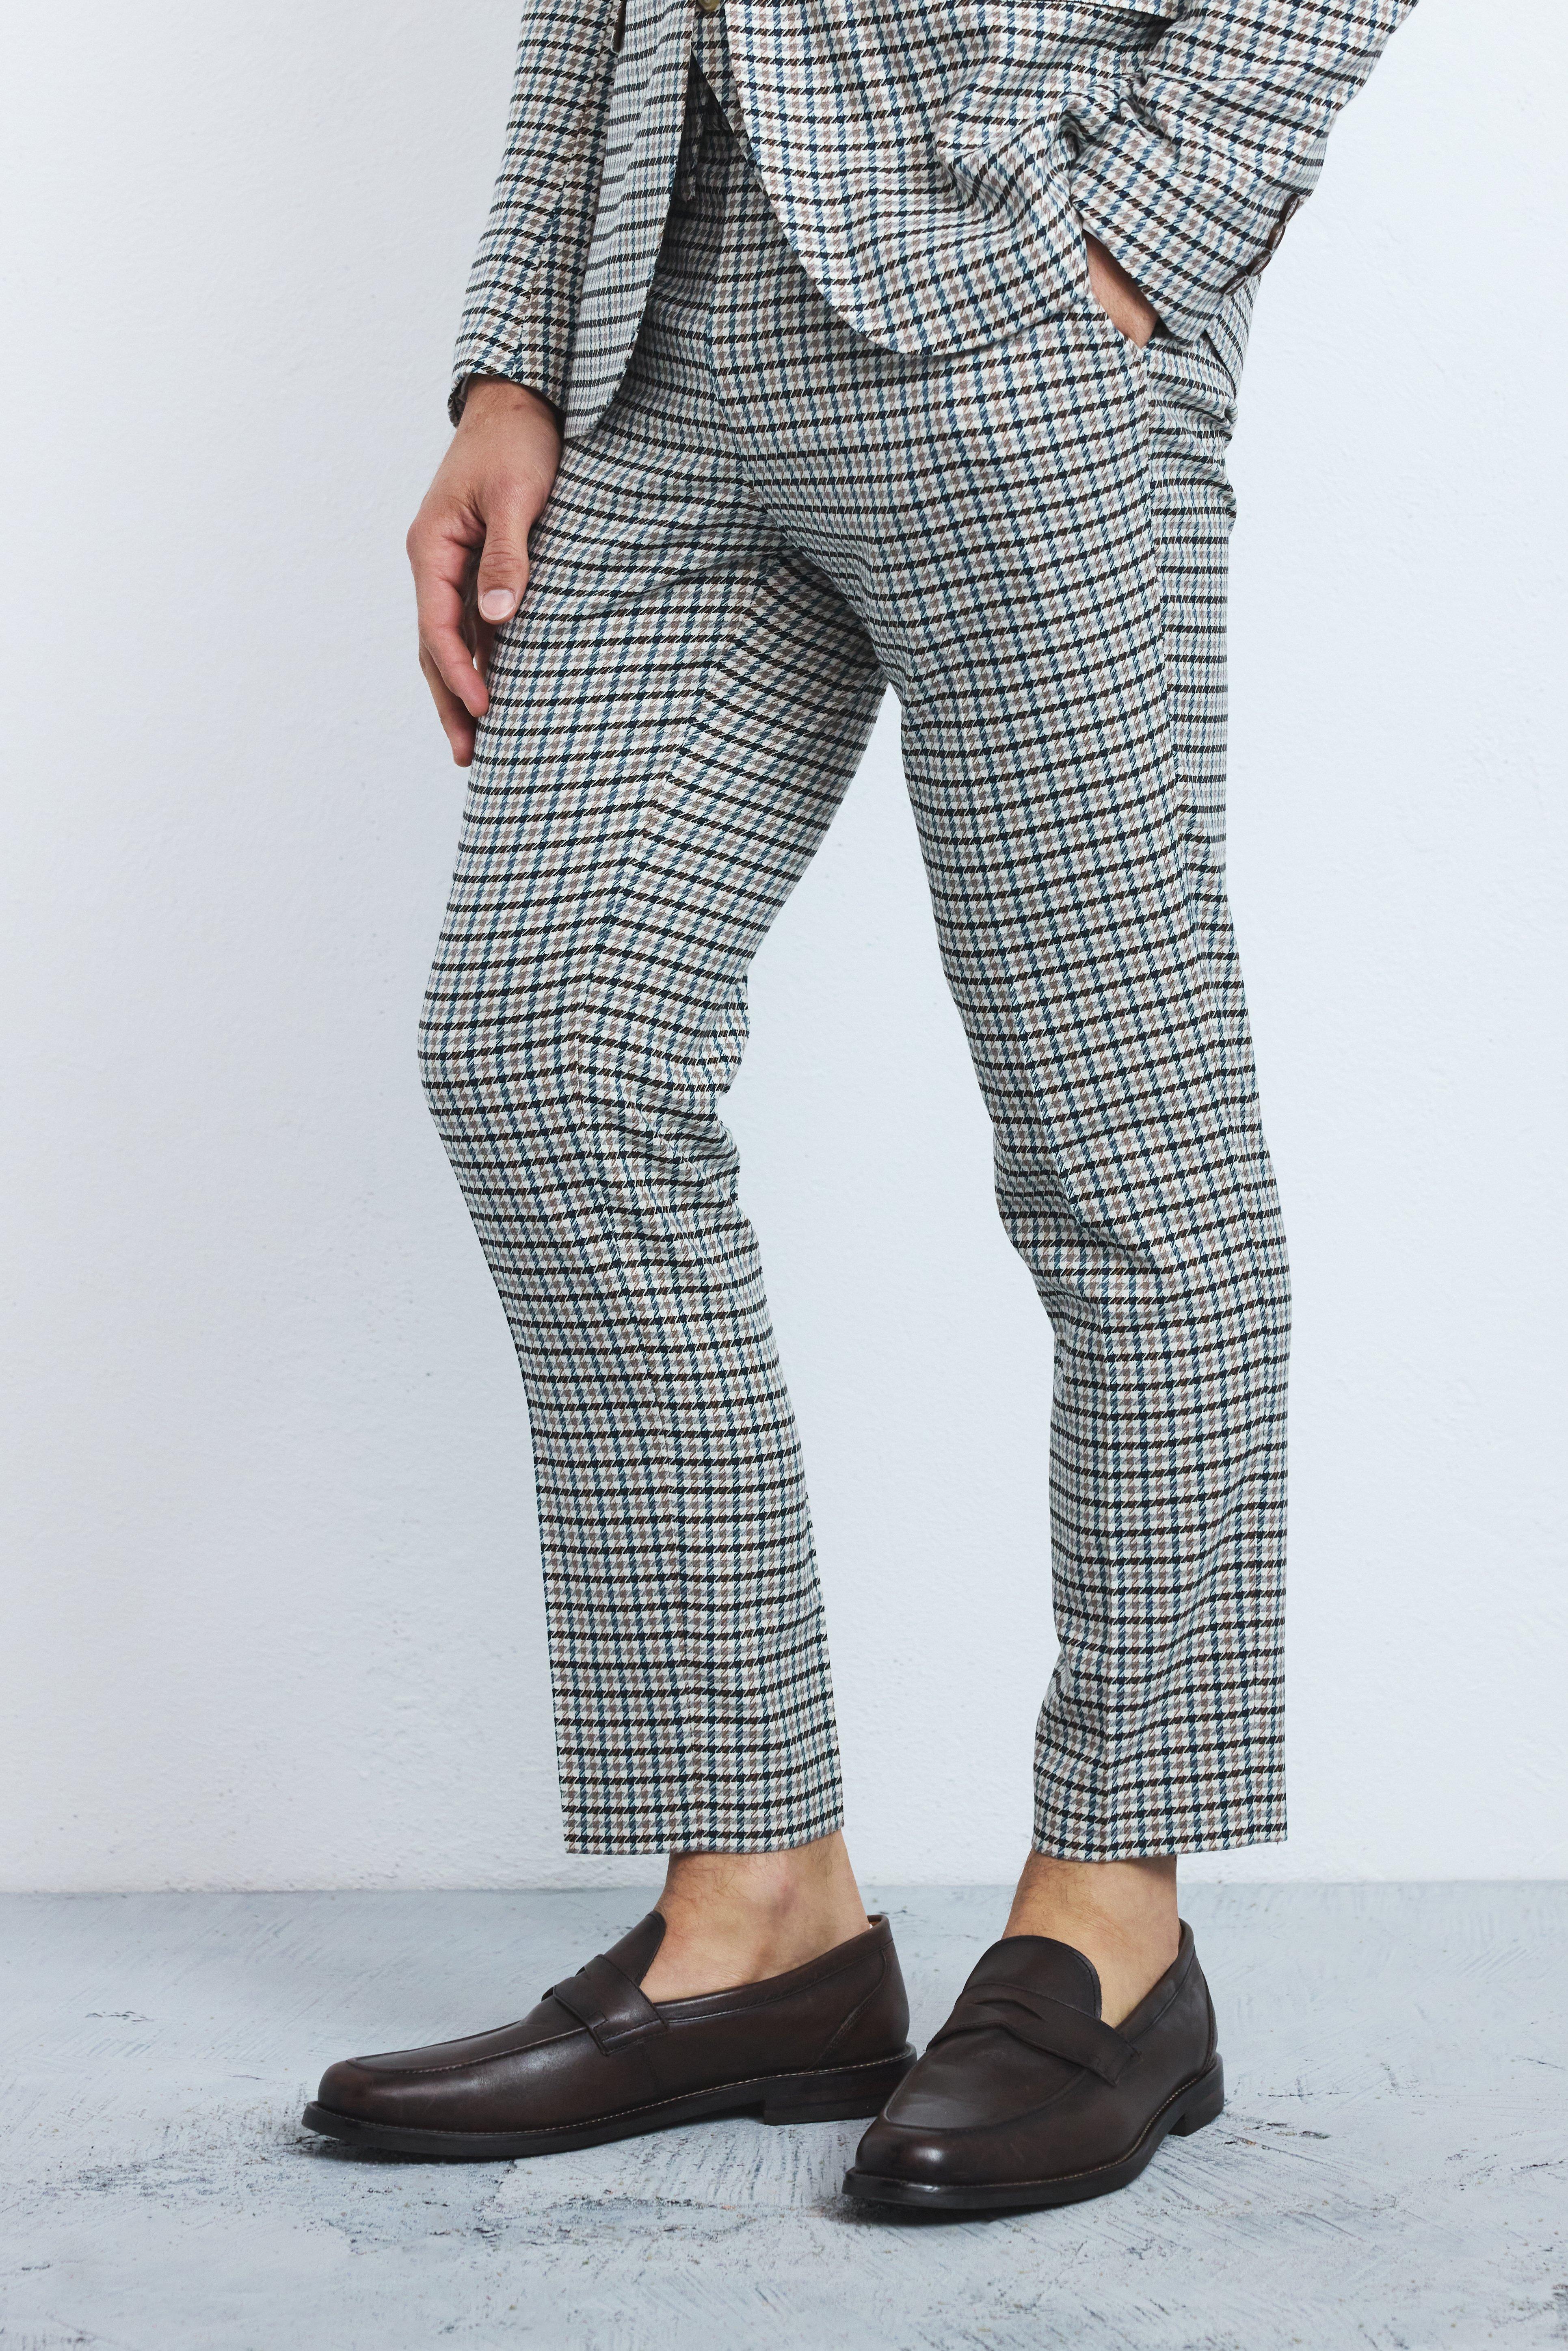 Mens Plaid Pants, Checkered Pants